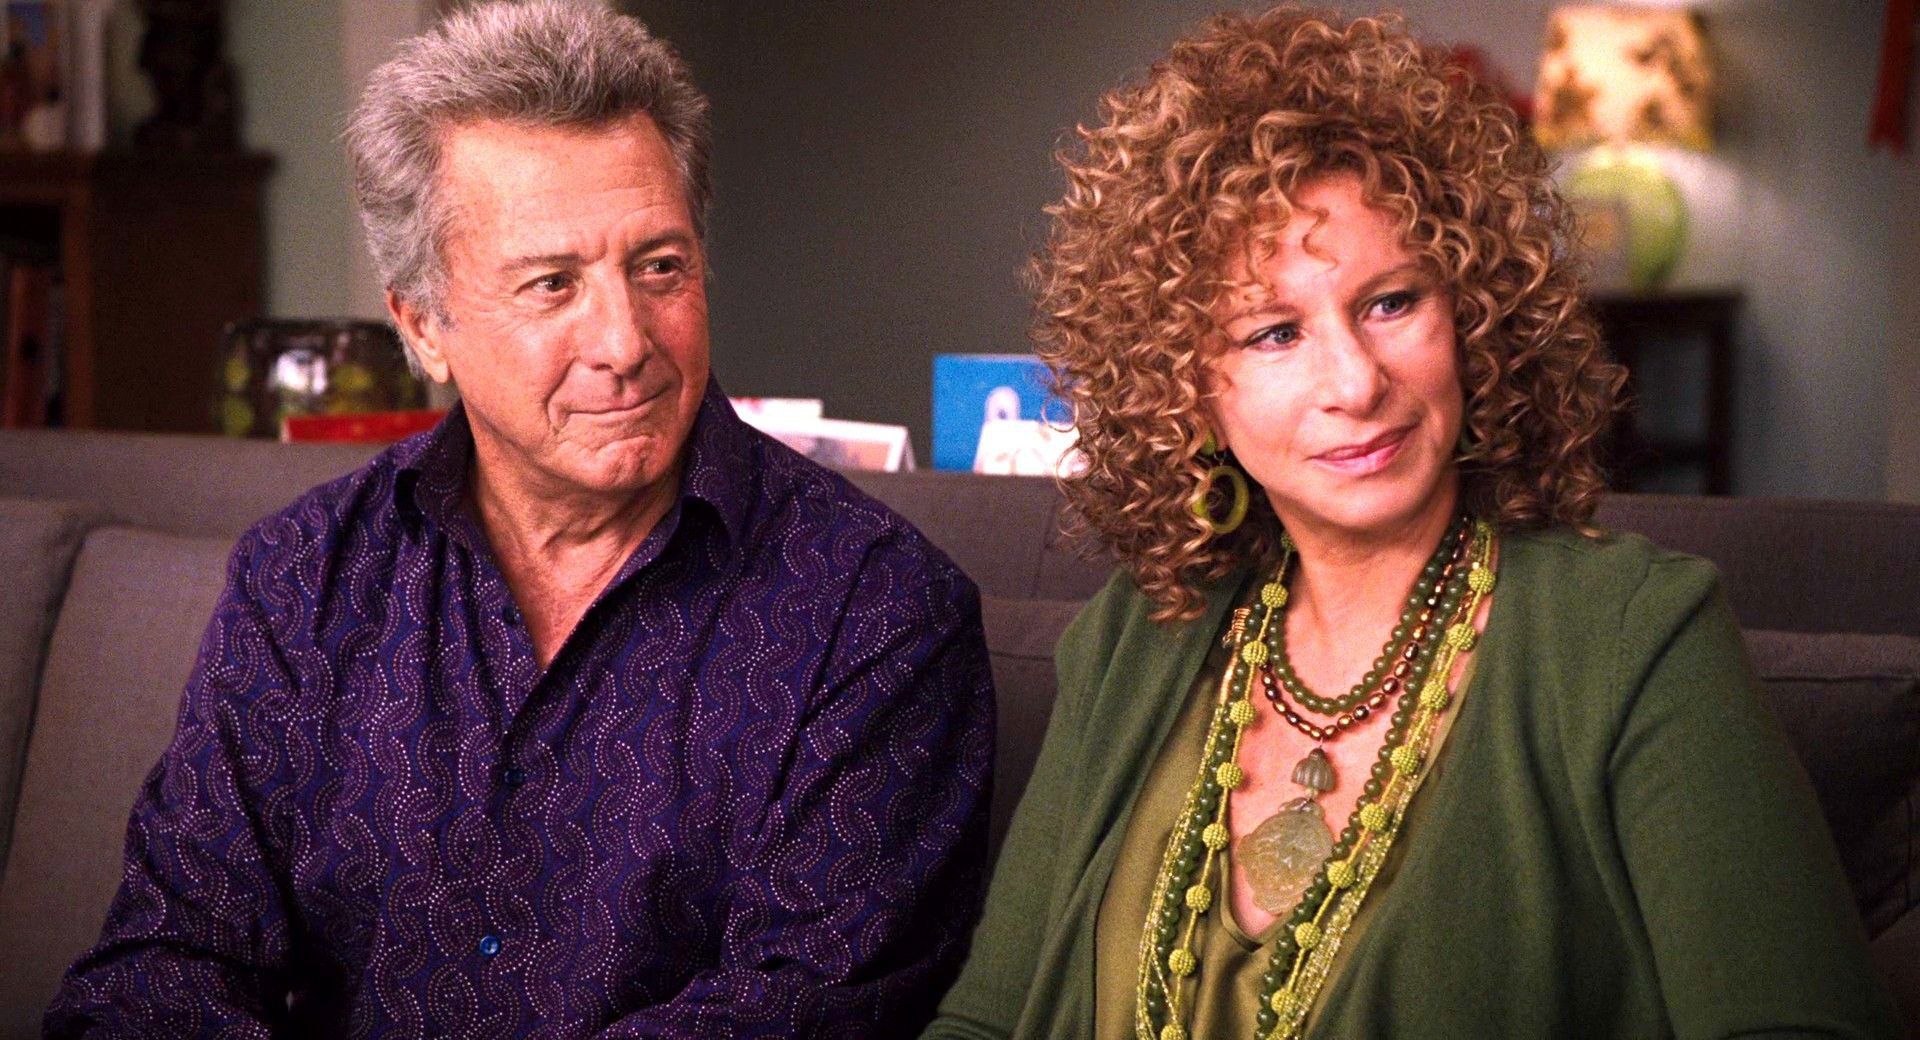 Dustin Hoffman and Barbra Streisand in Little Fockers.